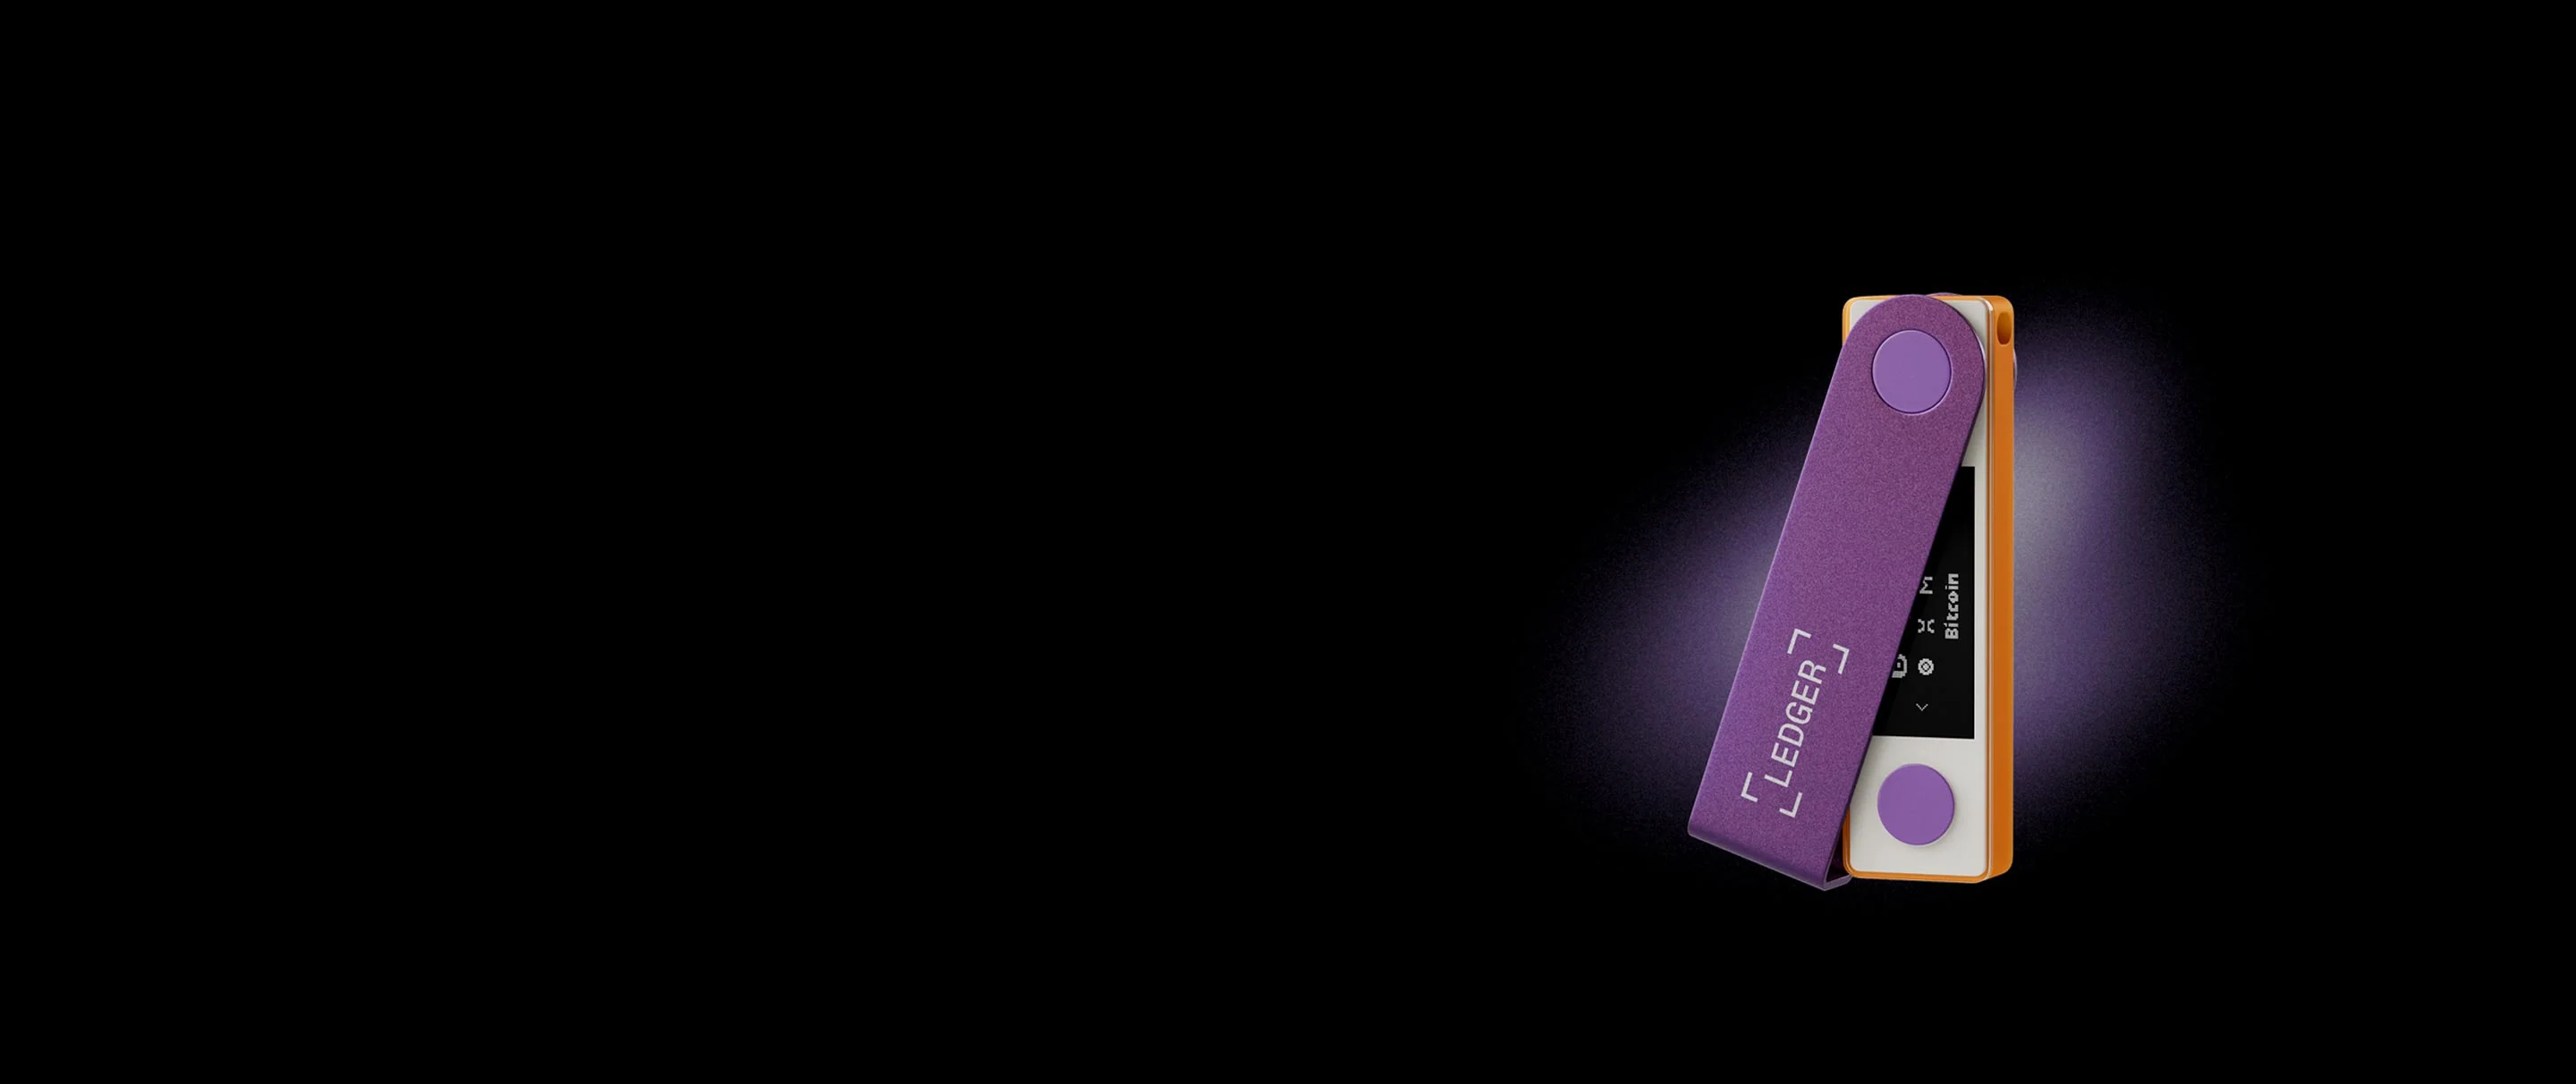 Ledger Nano X Crypto Hardware Wallet, Purple Amethyst - Worldshop